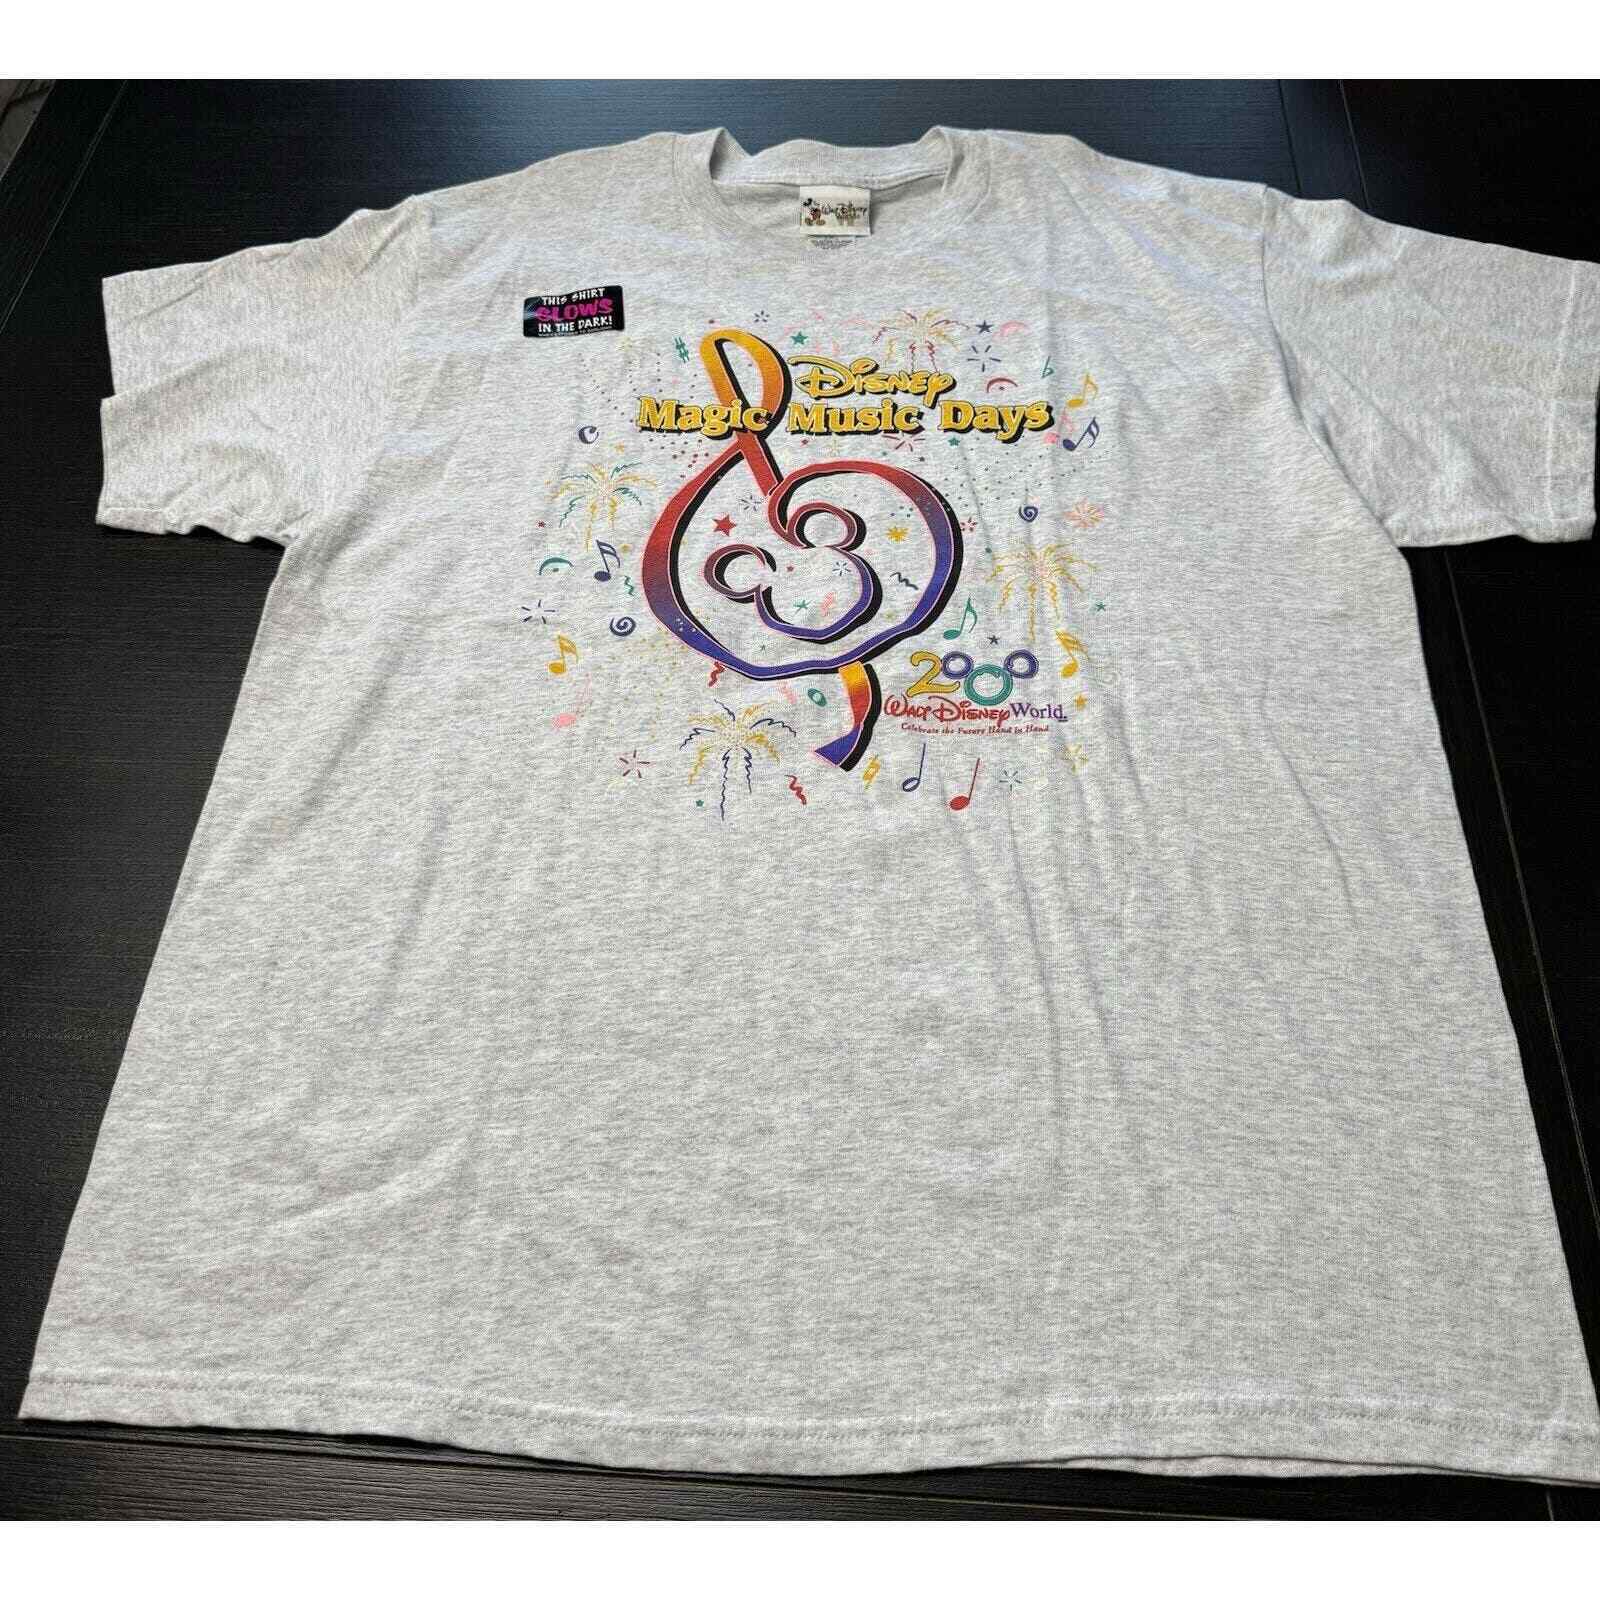 Vintage Disneyland Magic Music Days 2000 Glow In The Dark Shirt Size Xl NWT